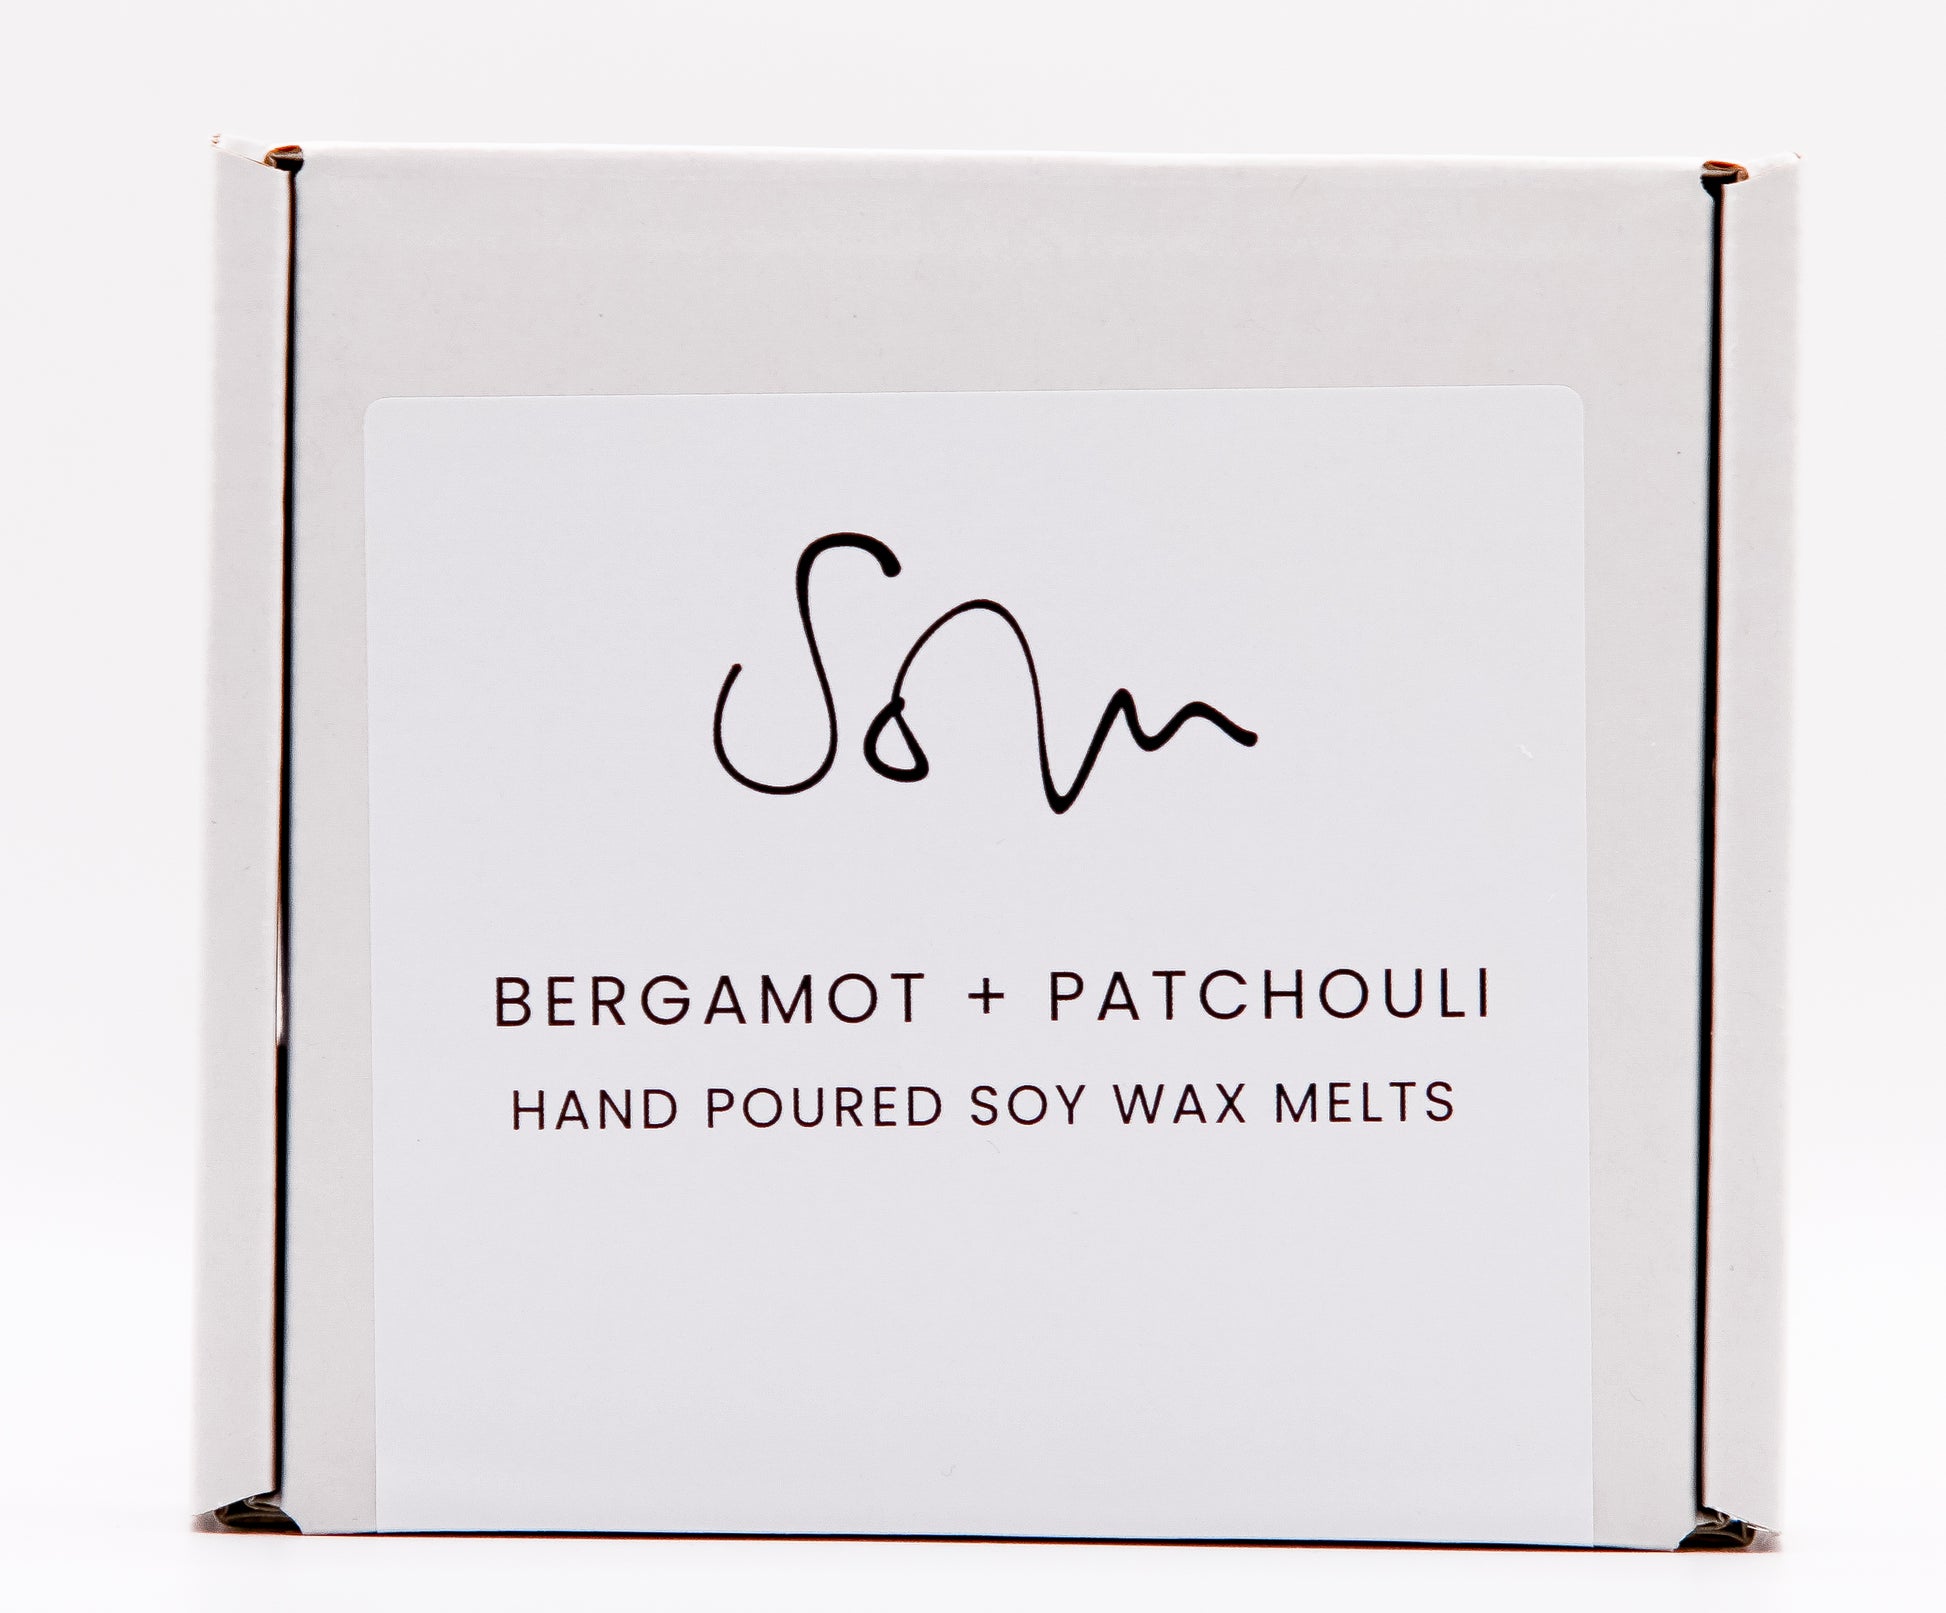 Bergamot and Patchouli Wax Melts - Solu Candles